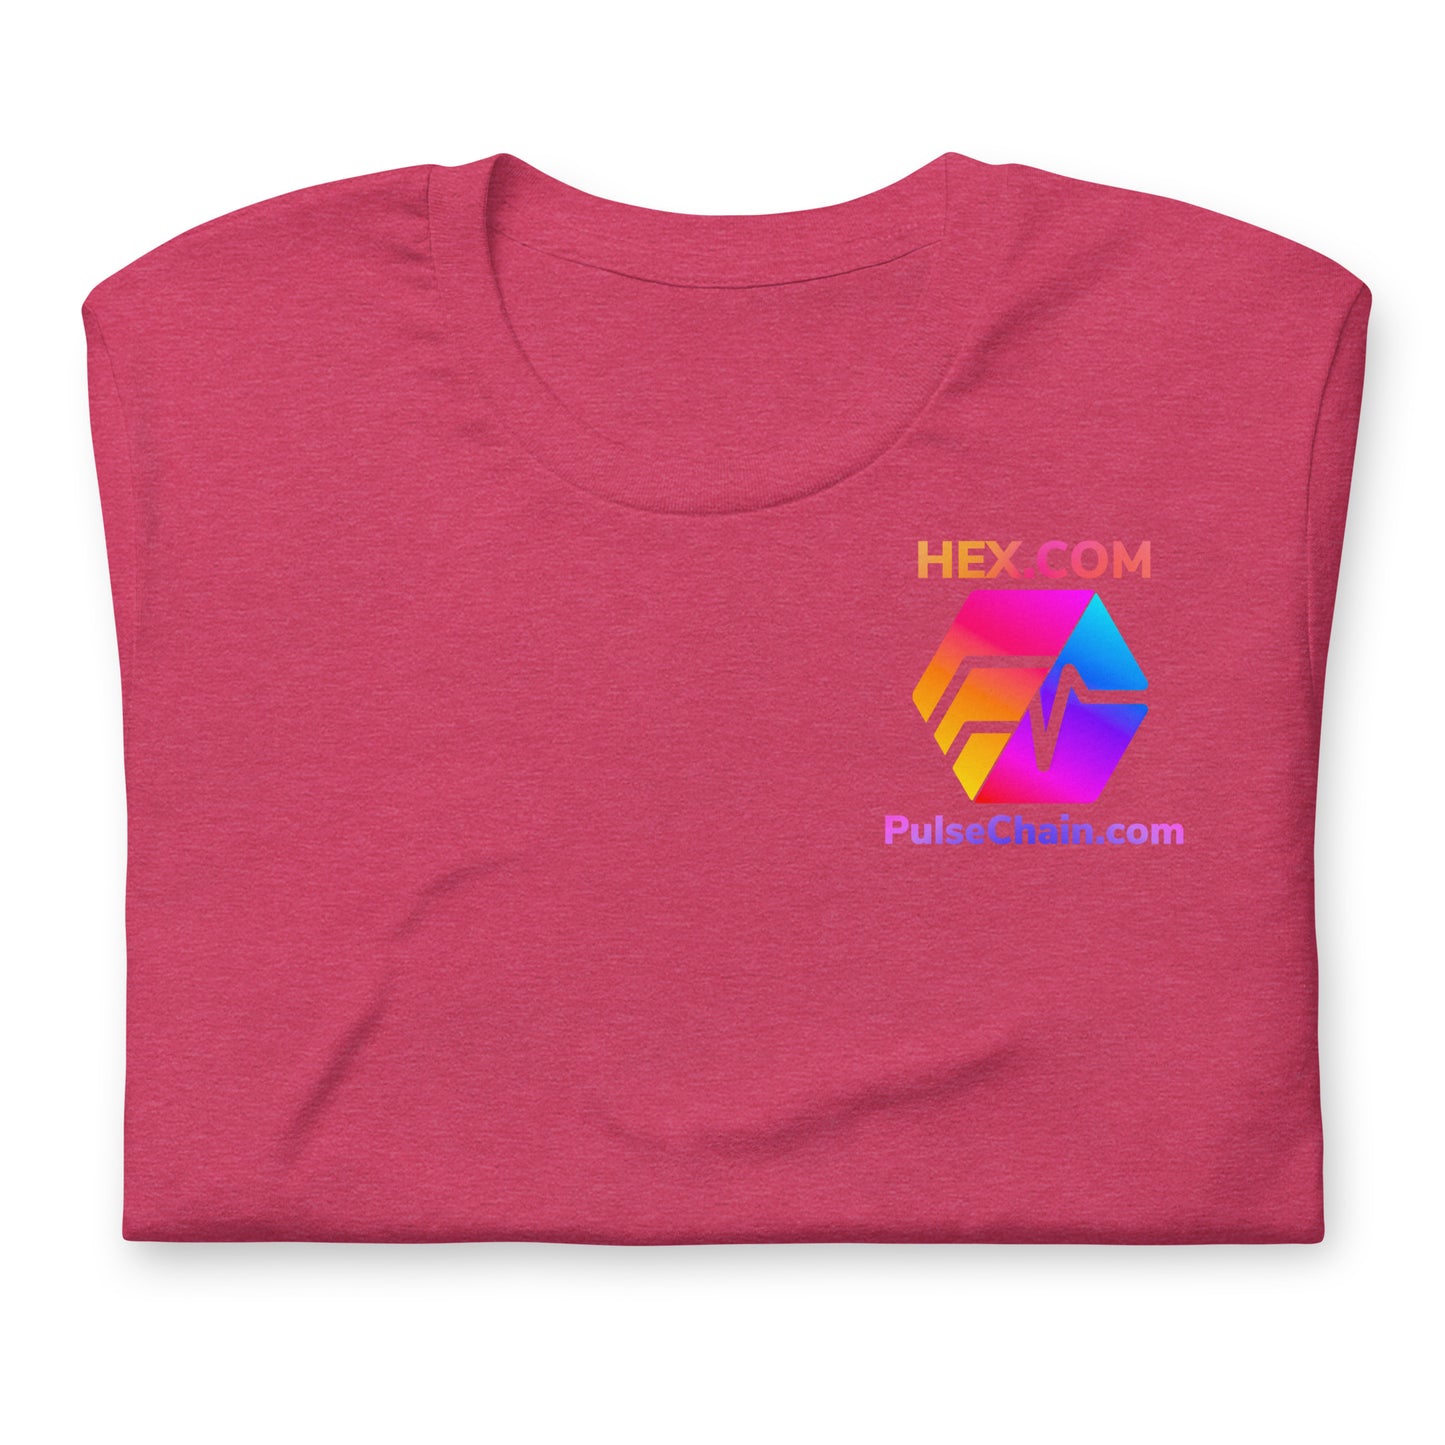 HEX.COM/PulseChain.com Unisex T-Shirt